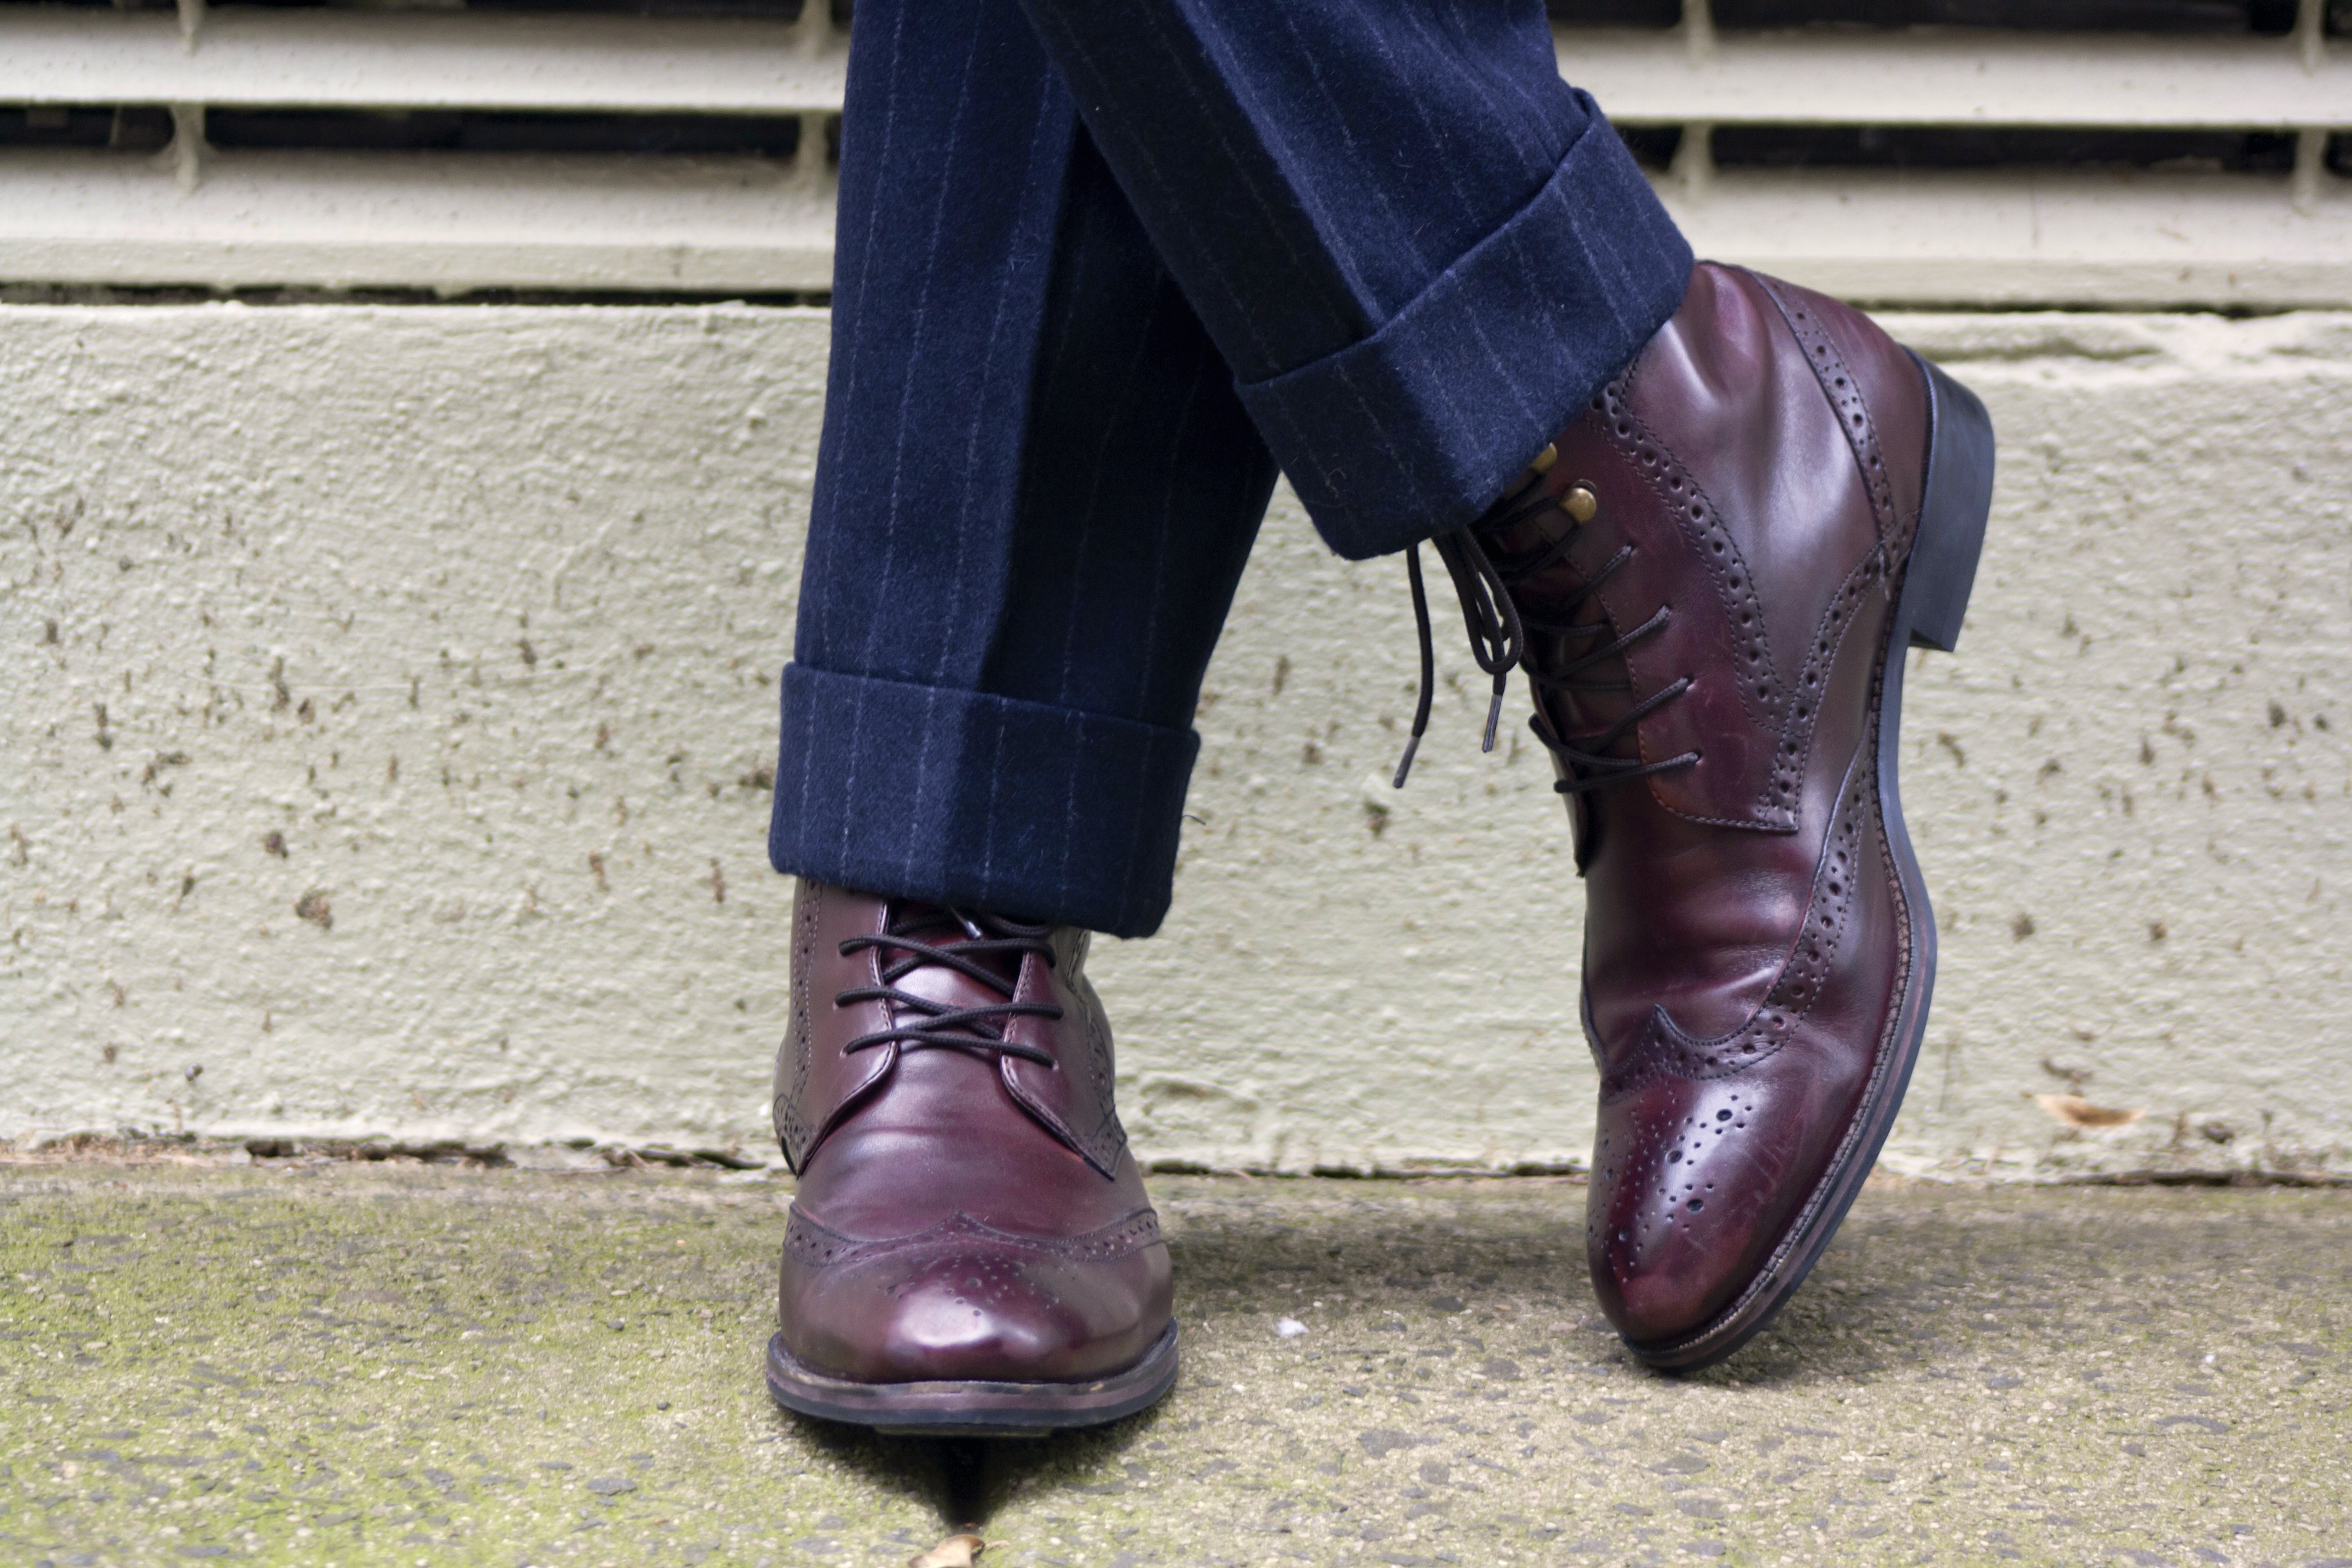 Men's Style Pro in Jack Wills Darrock Chalk Stripe Suit & Johnston & Murphy Tyndall Wingtip Oxblood Boots